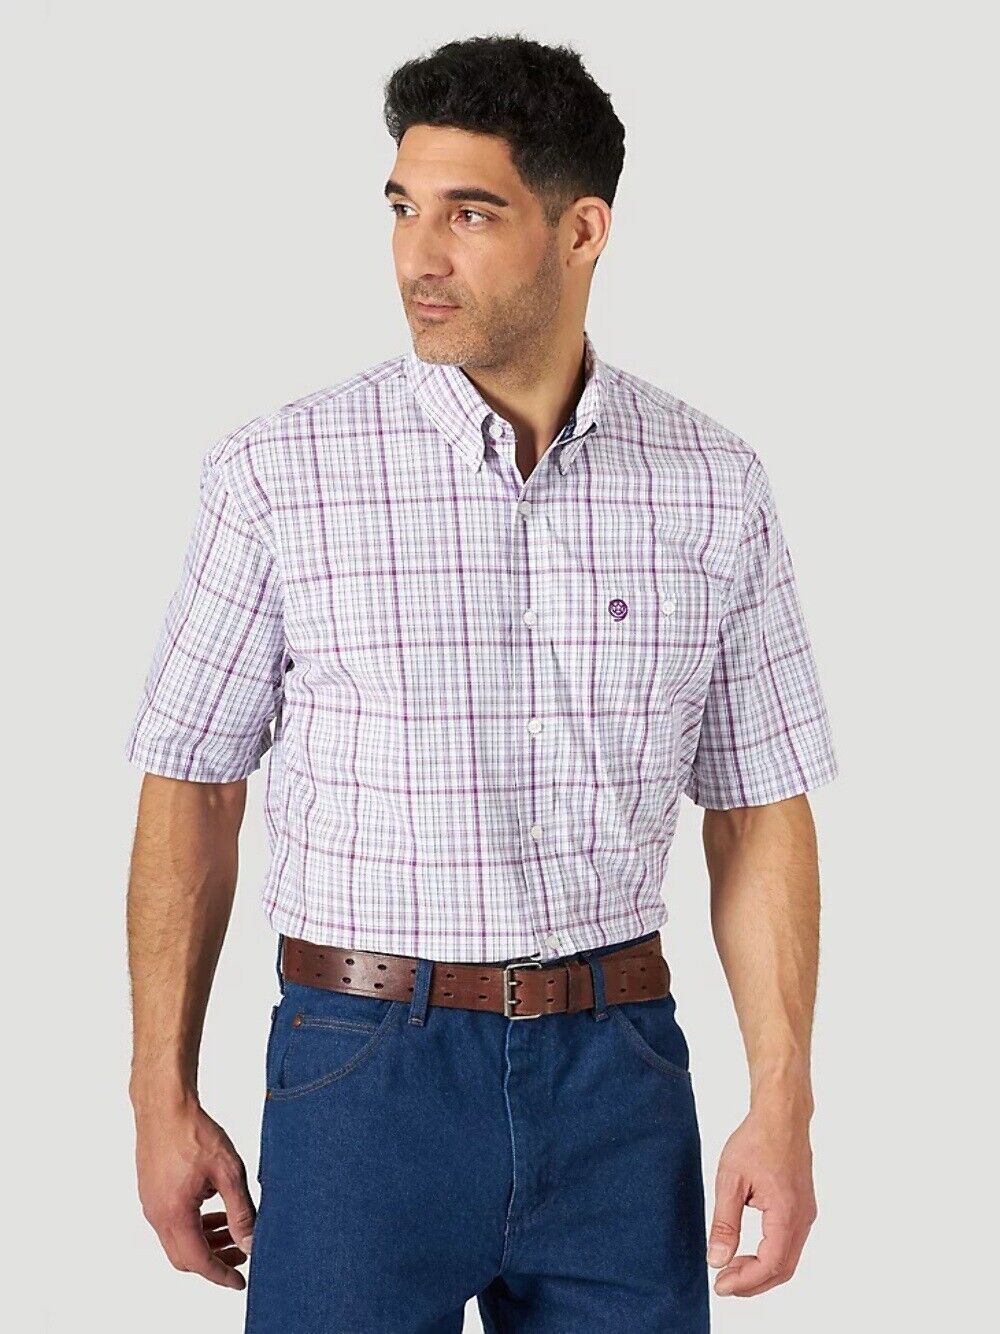 Wrangler - George Strait Collection Short Sleeve Purple Plaid Shirt